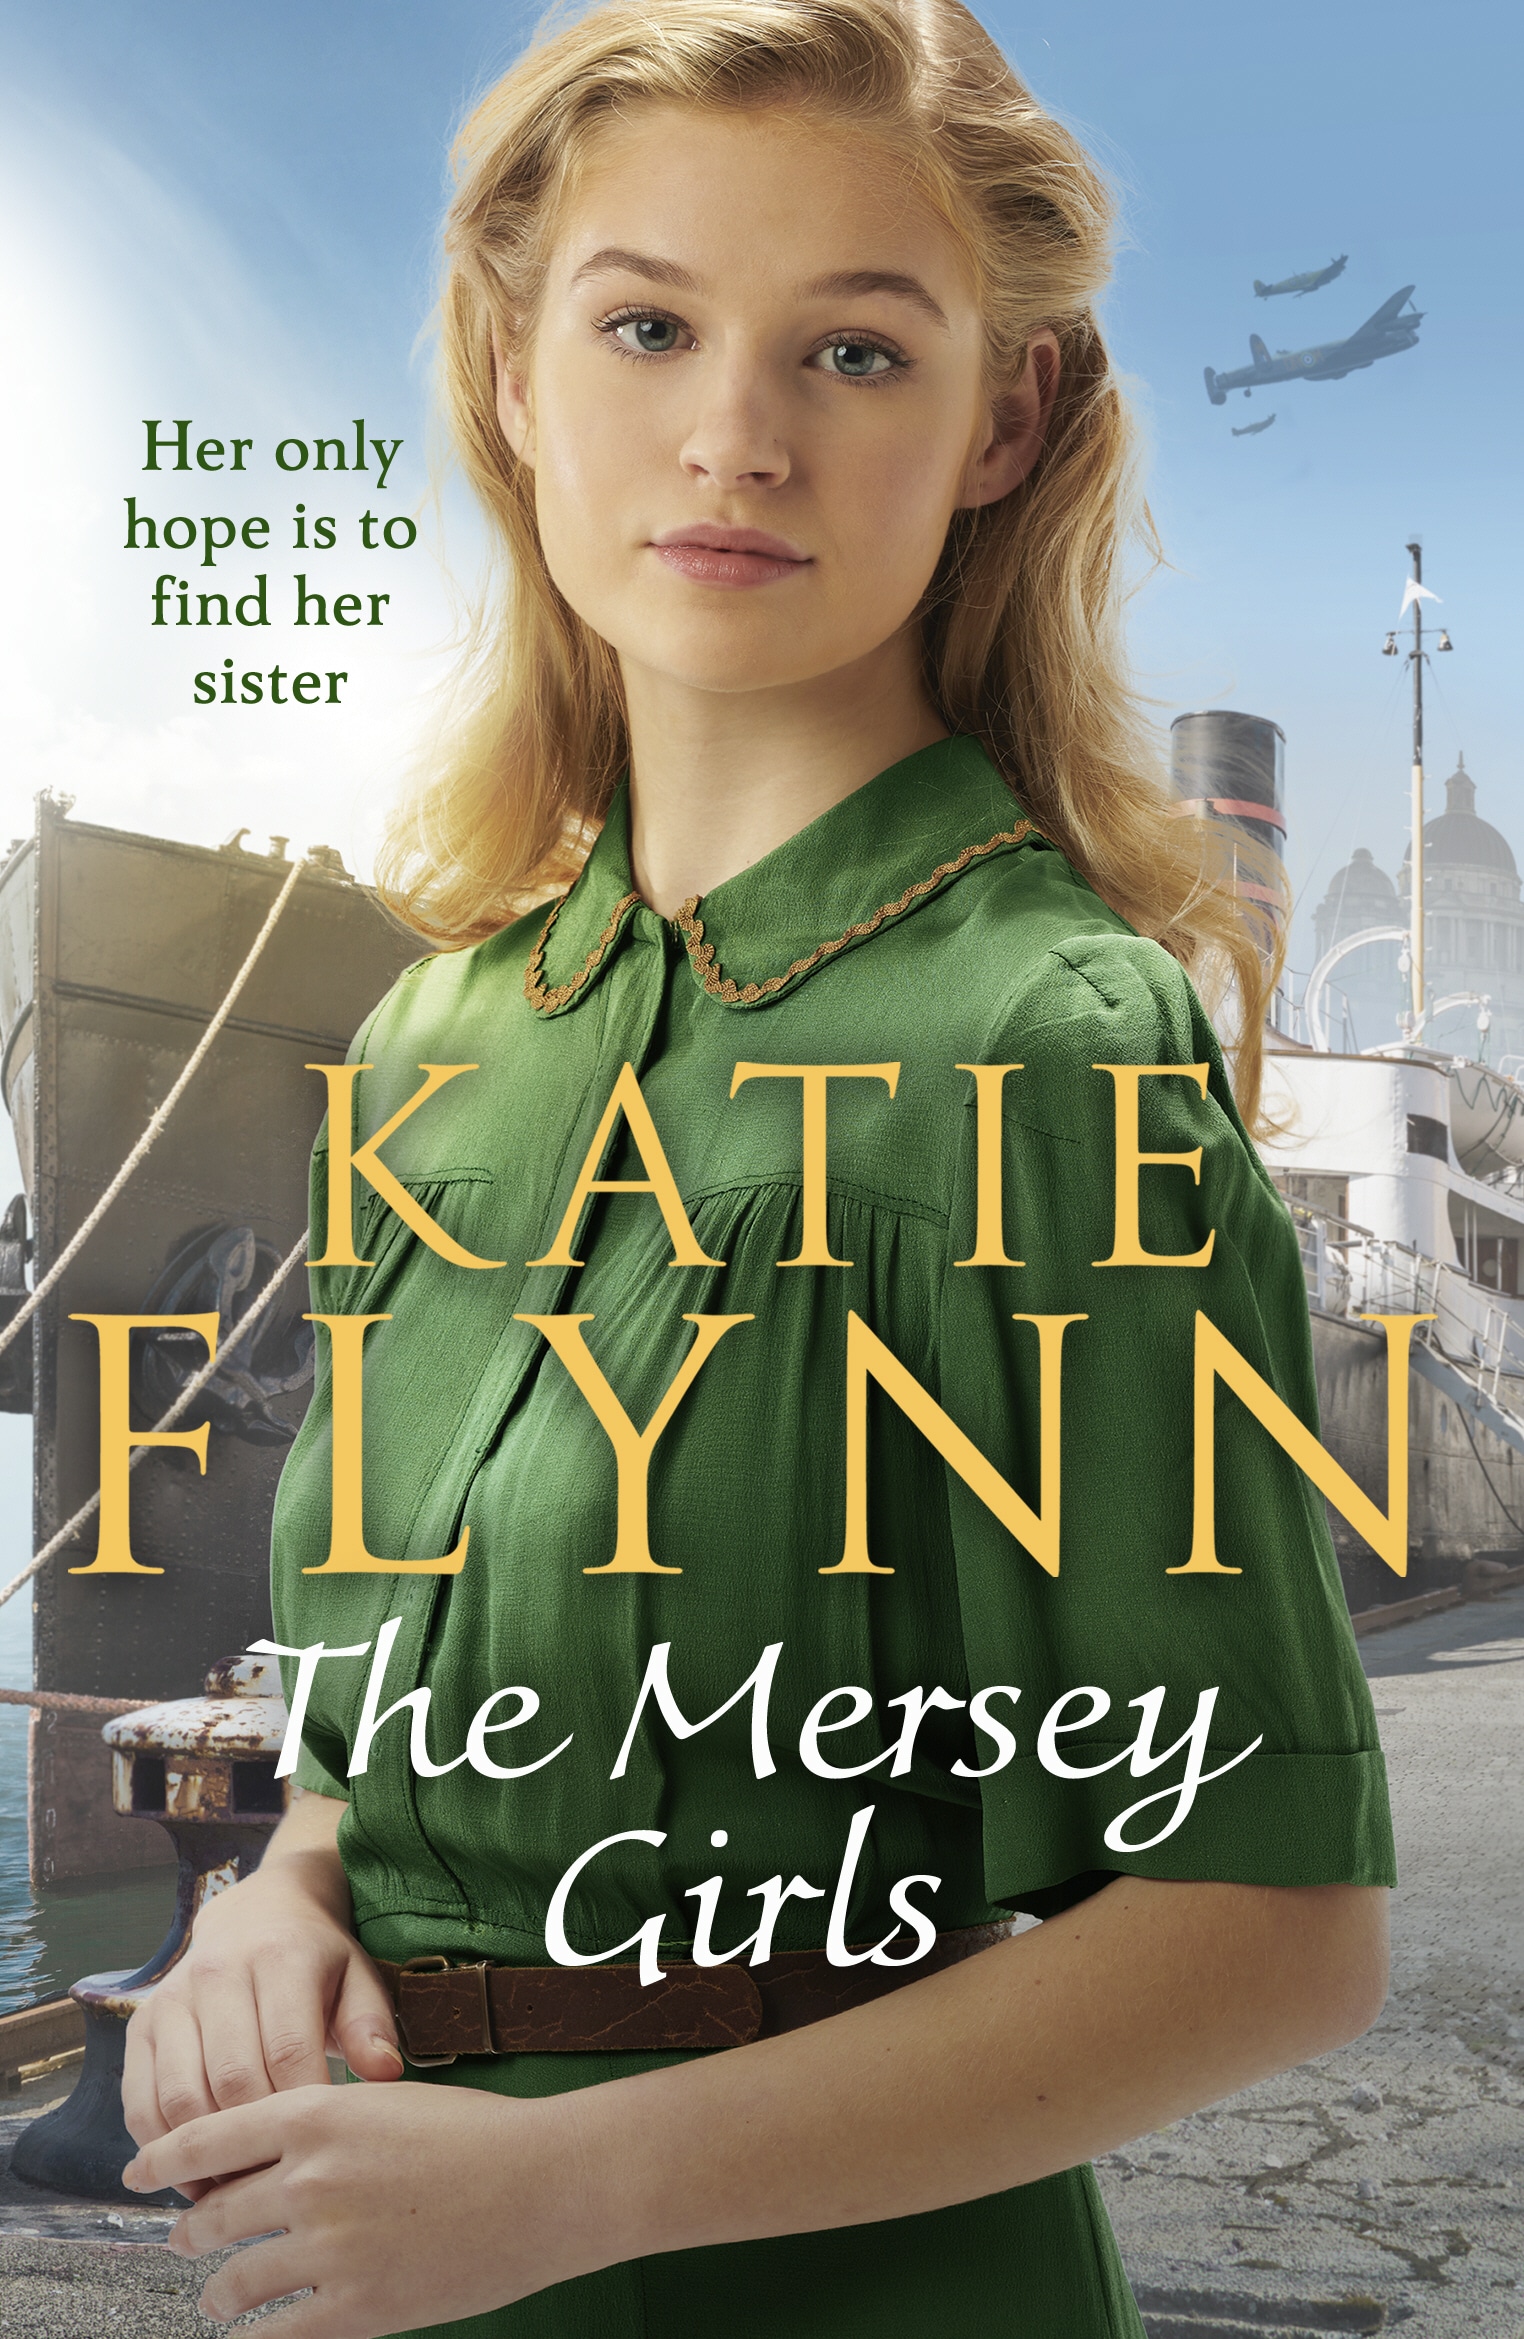 Book “The Mersey Girls” by Katie Flynn — June 11, 2020